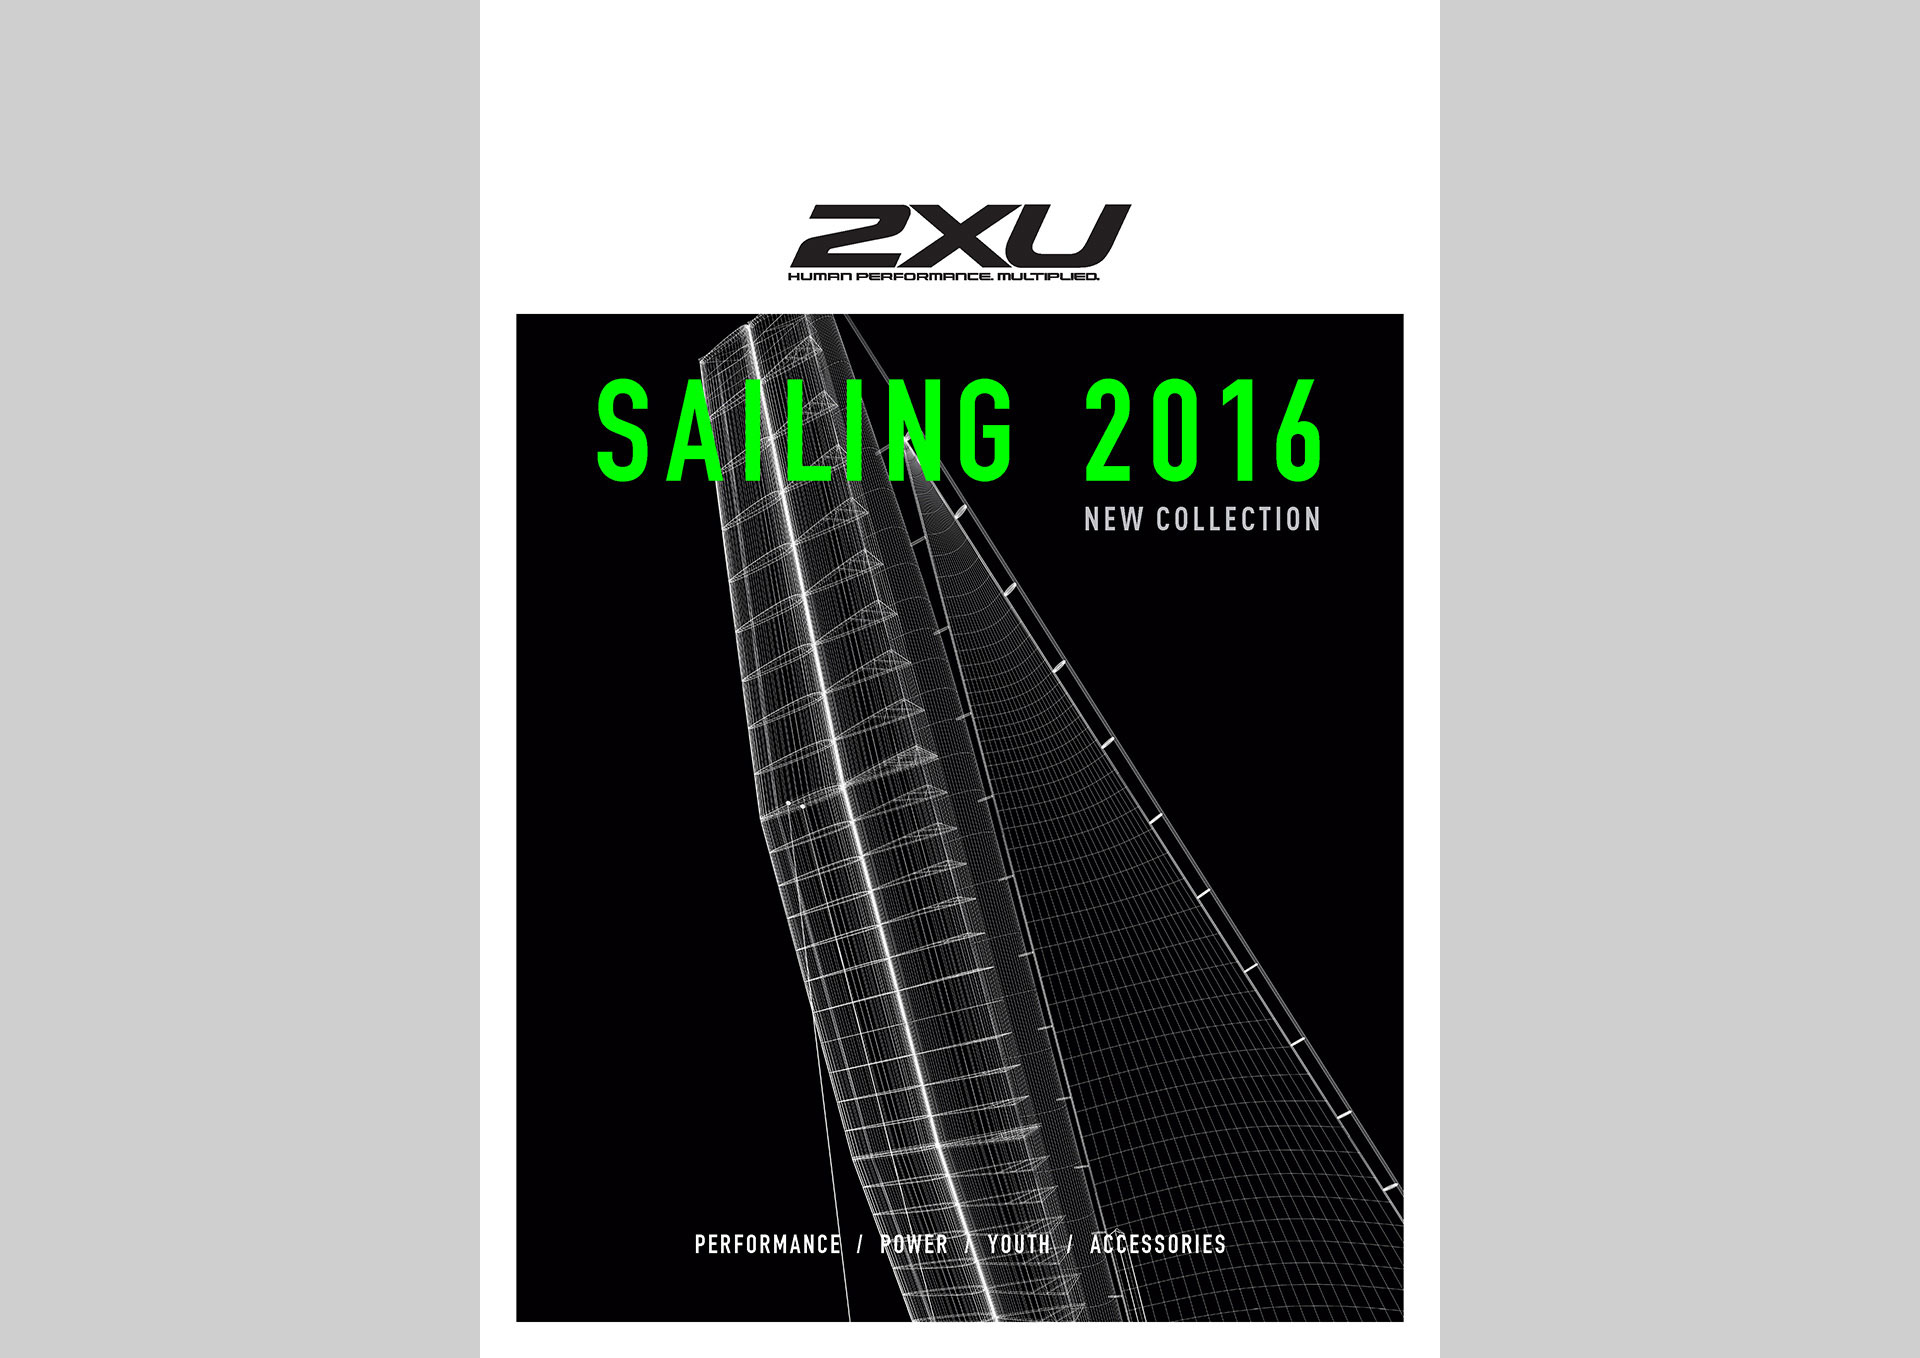 Robertstown_2XU_Sailing_eCatalogue_2016_Cover